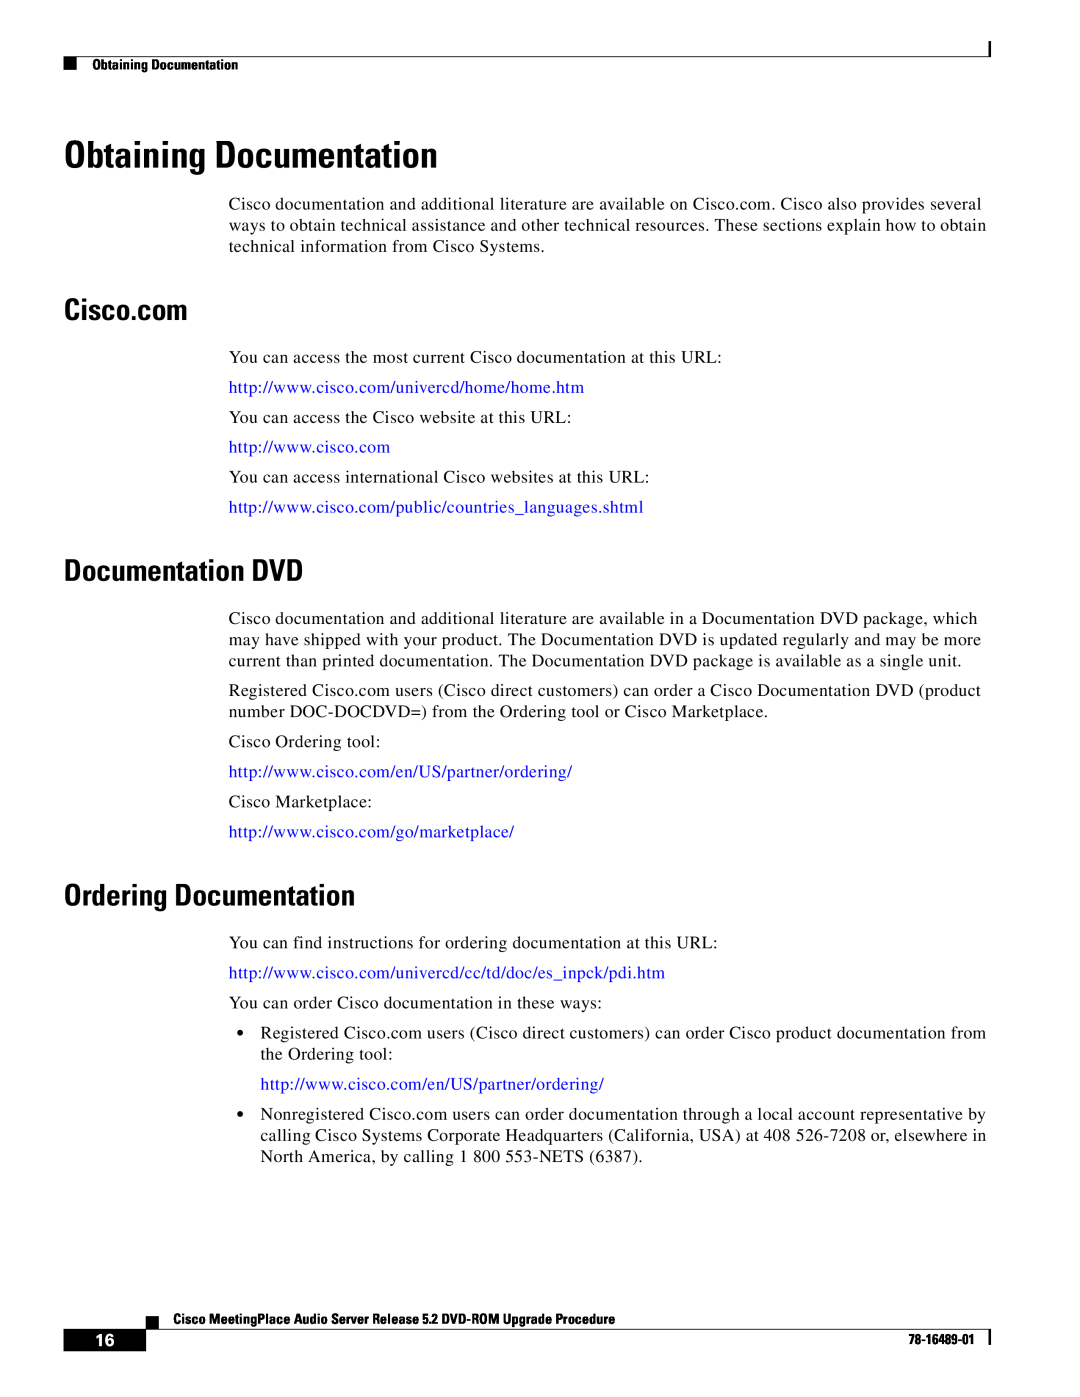 Cisco Systems DVD-ROM manual Obtaining Documentation, Cisco.com, Documentation DVD, Ordering Documentation 